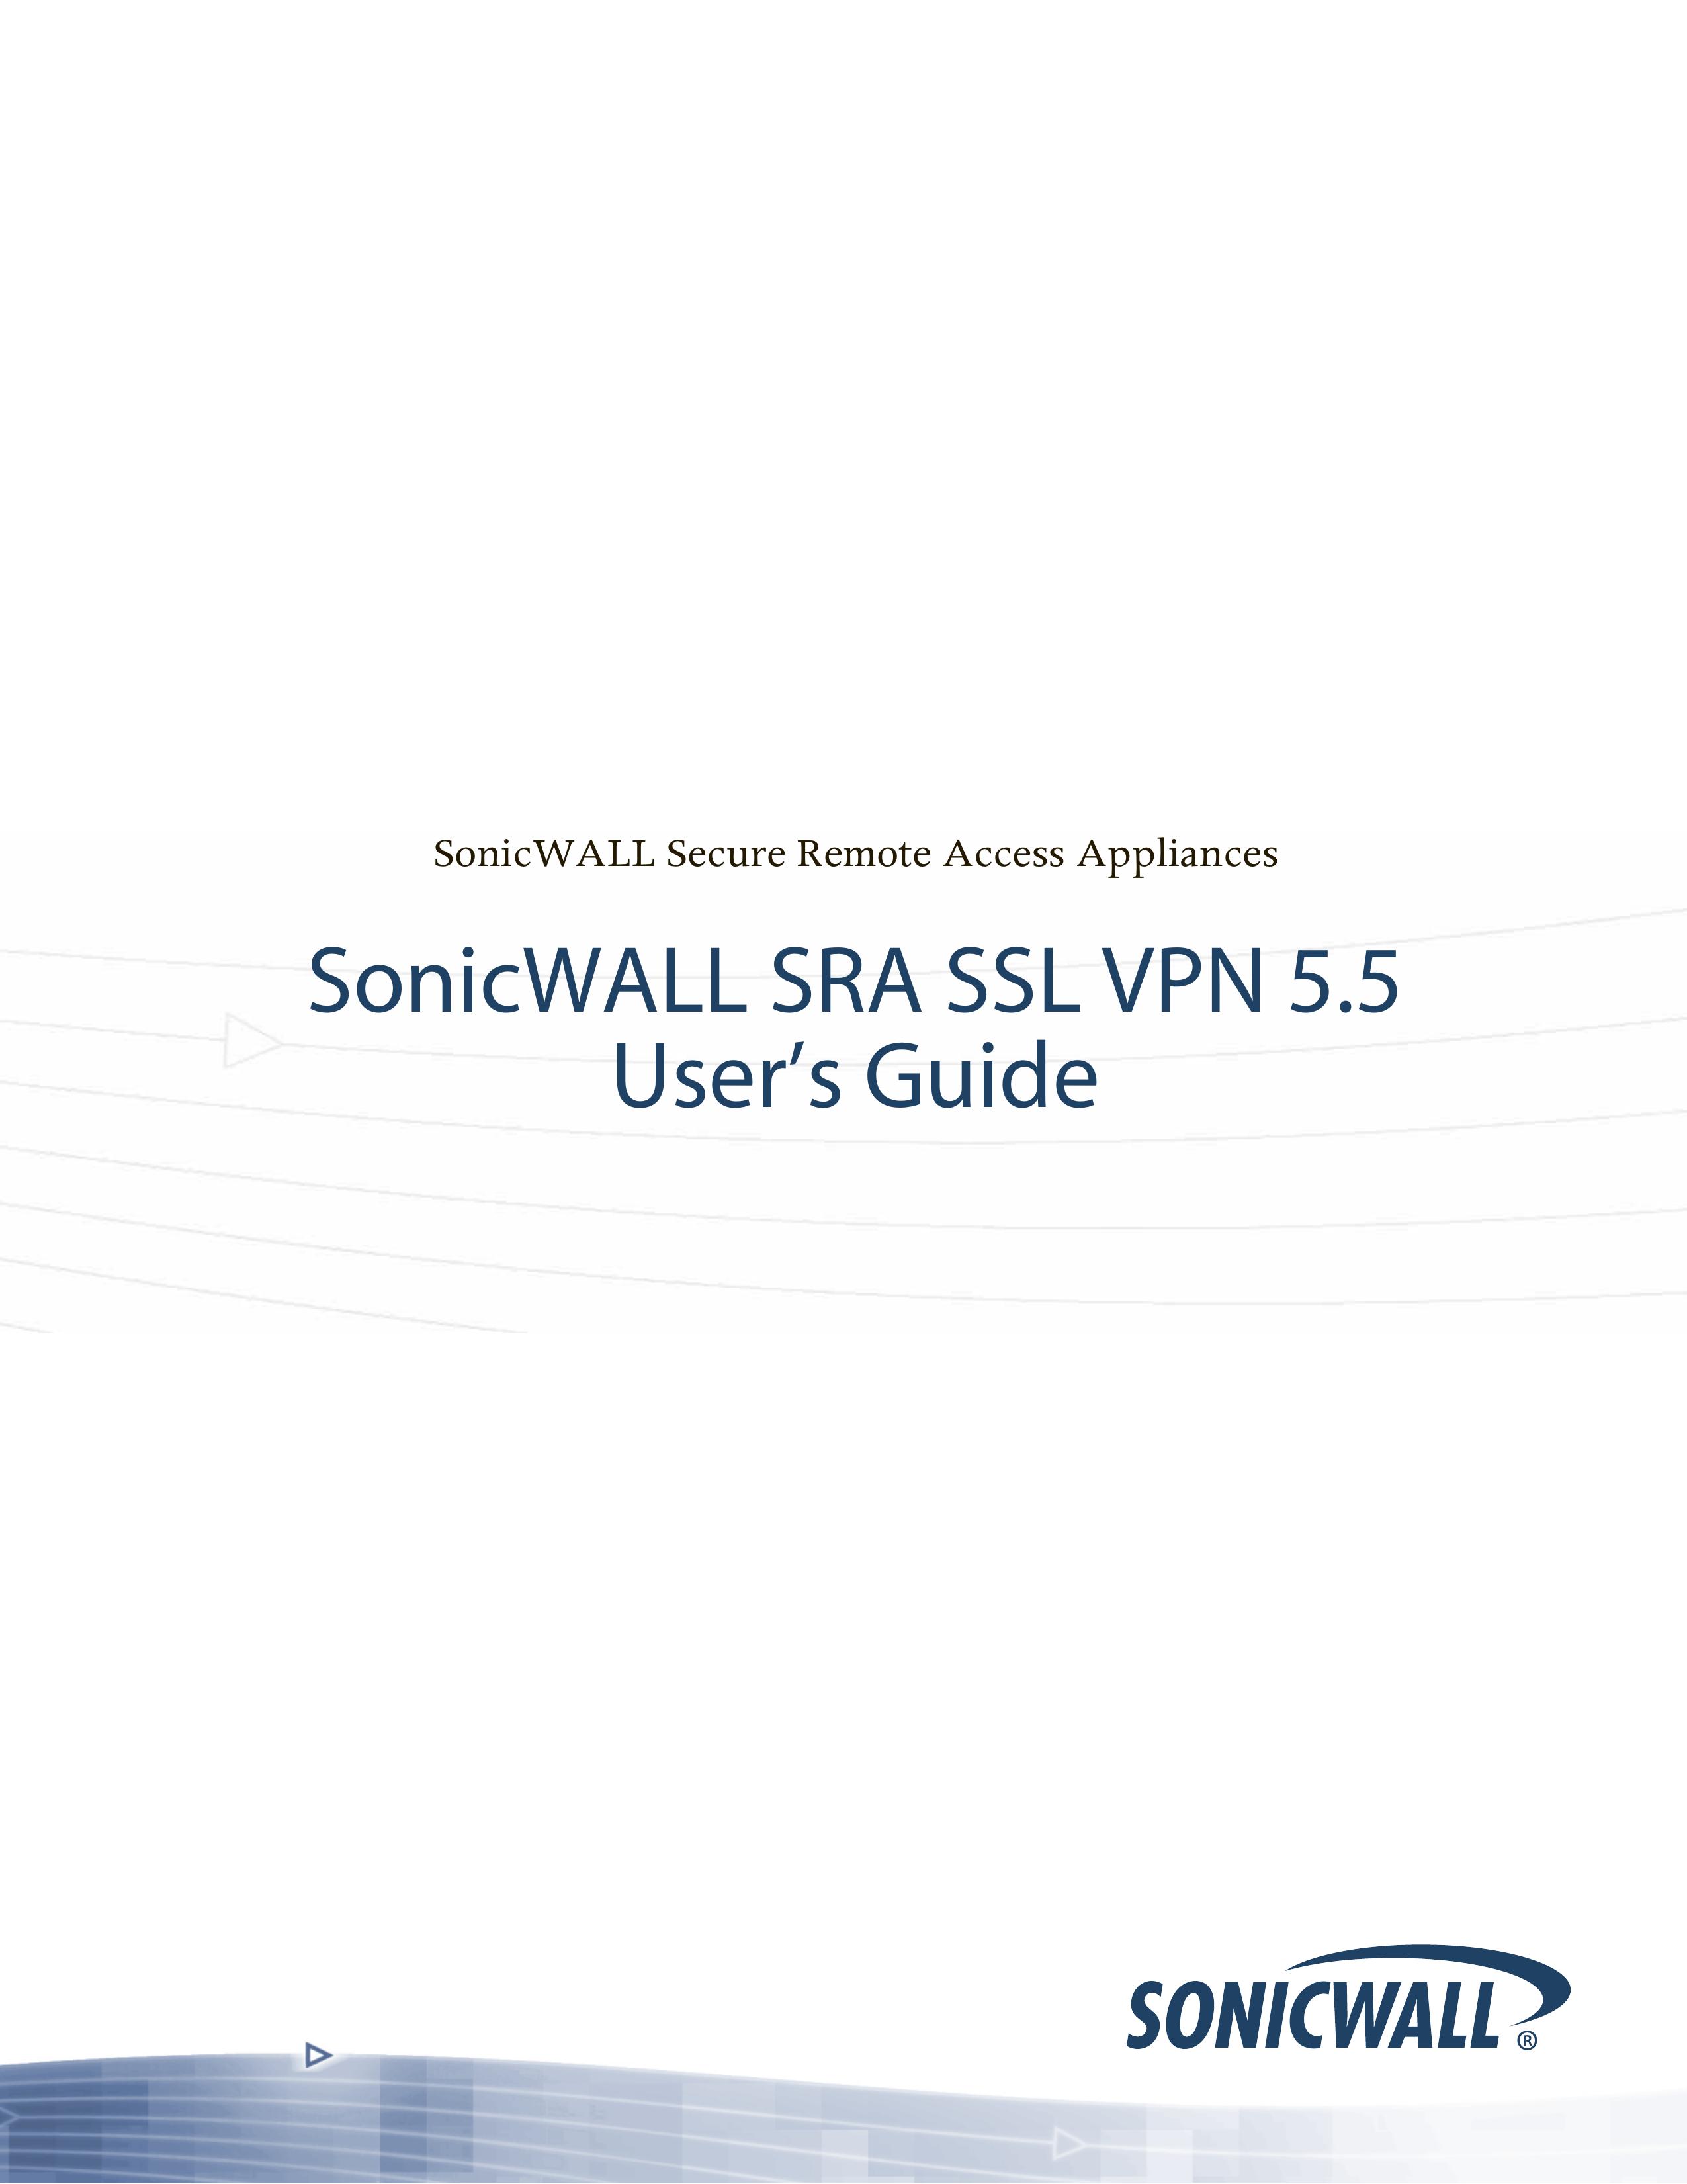 SonicWALL SonicWALL SSL VPN 5.5 Sleep Apnea Machine User Manual